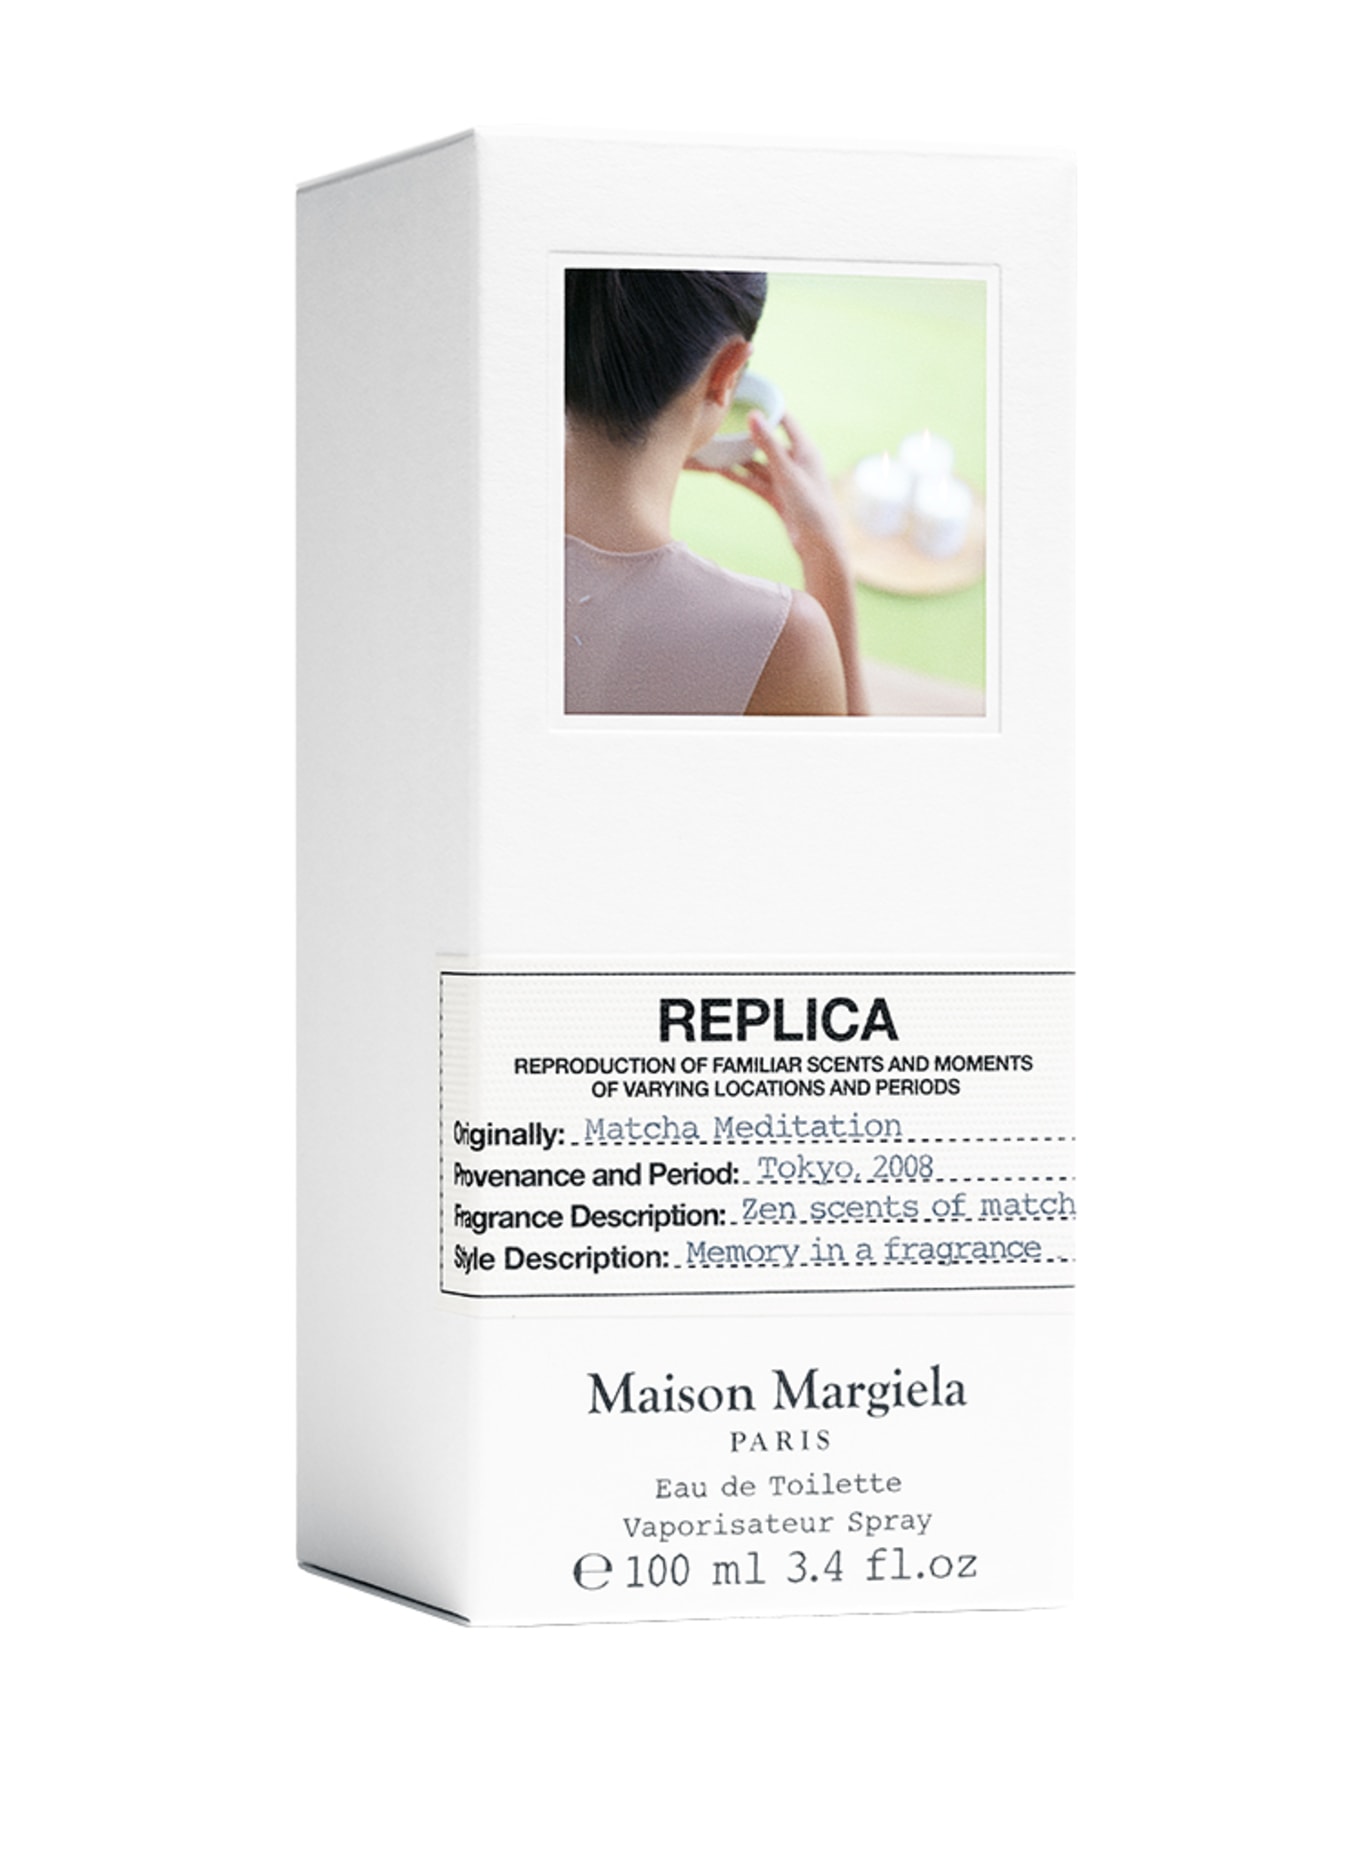 Maison Margiela Fragrances REPLICA MATCHA MEDITATION (Obrazek 2)